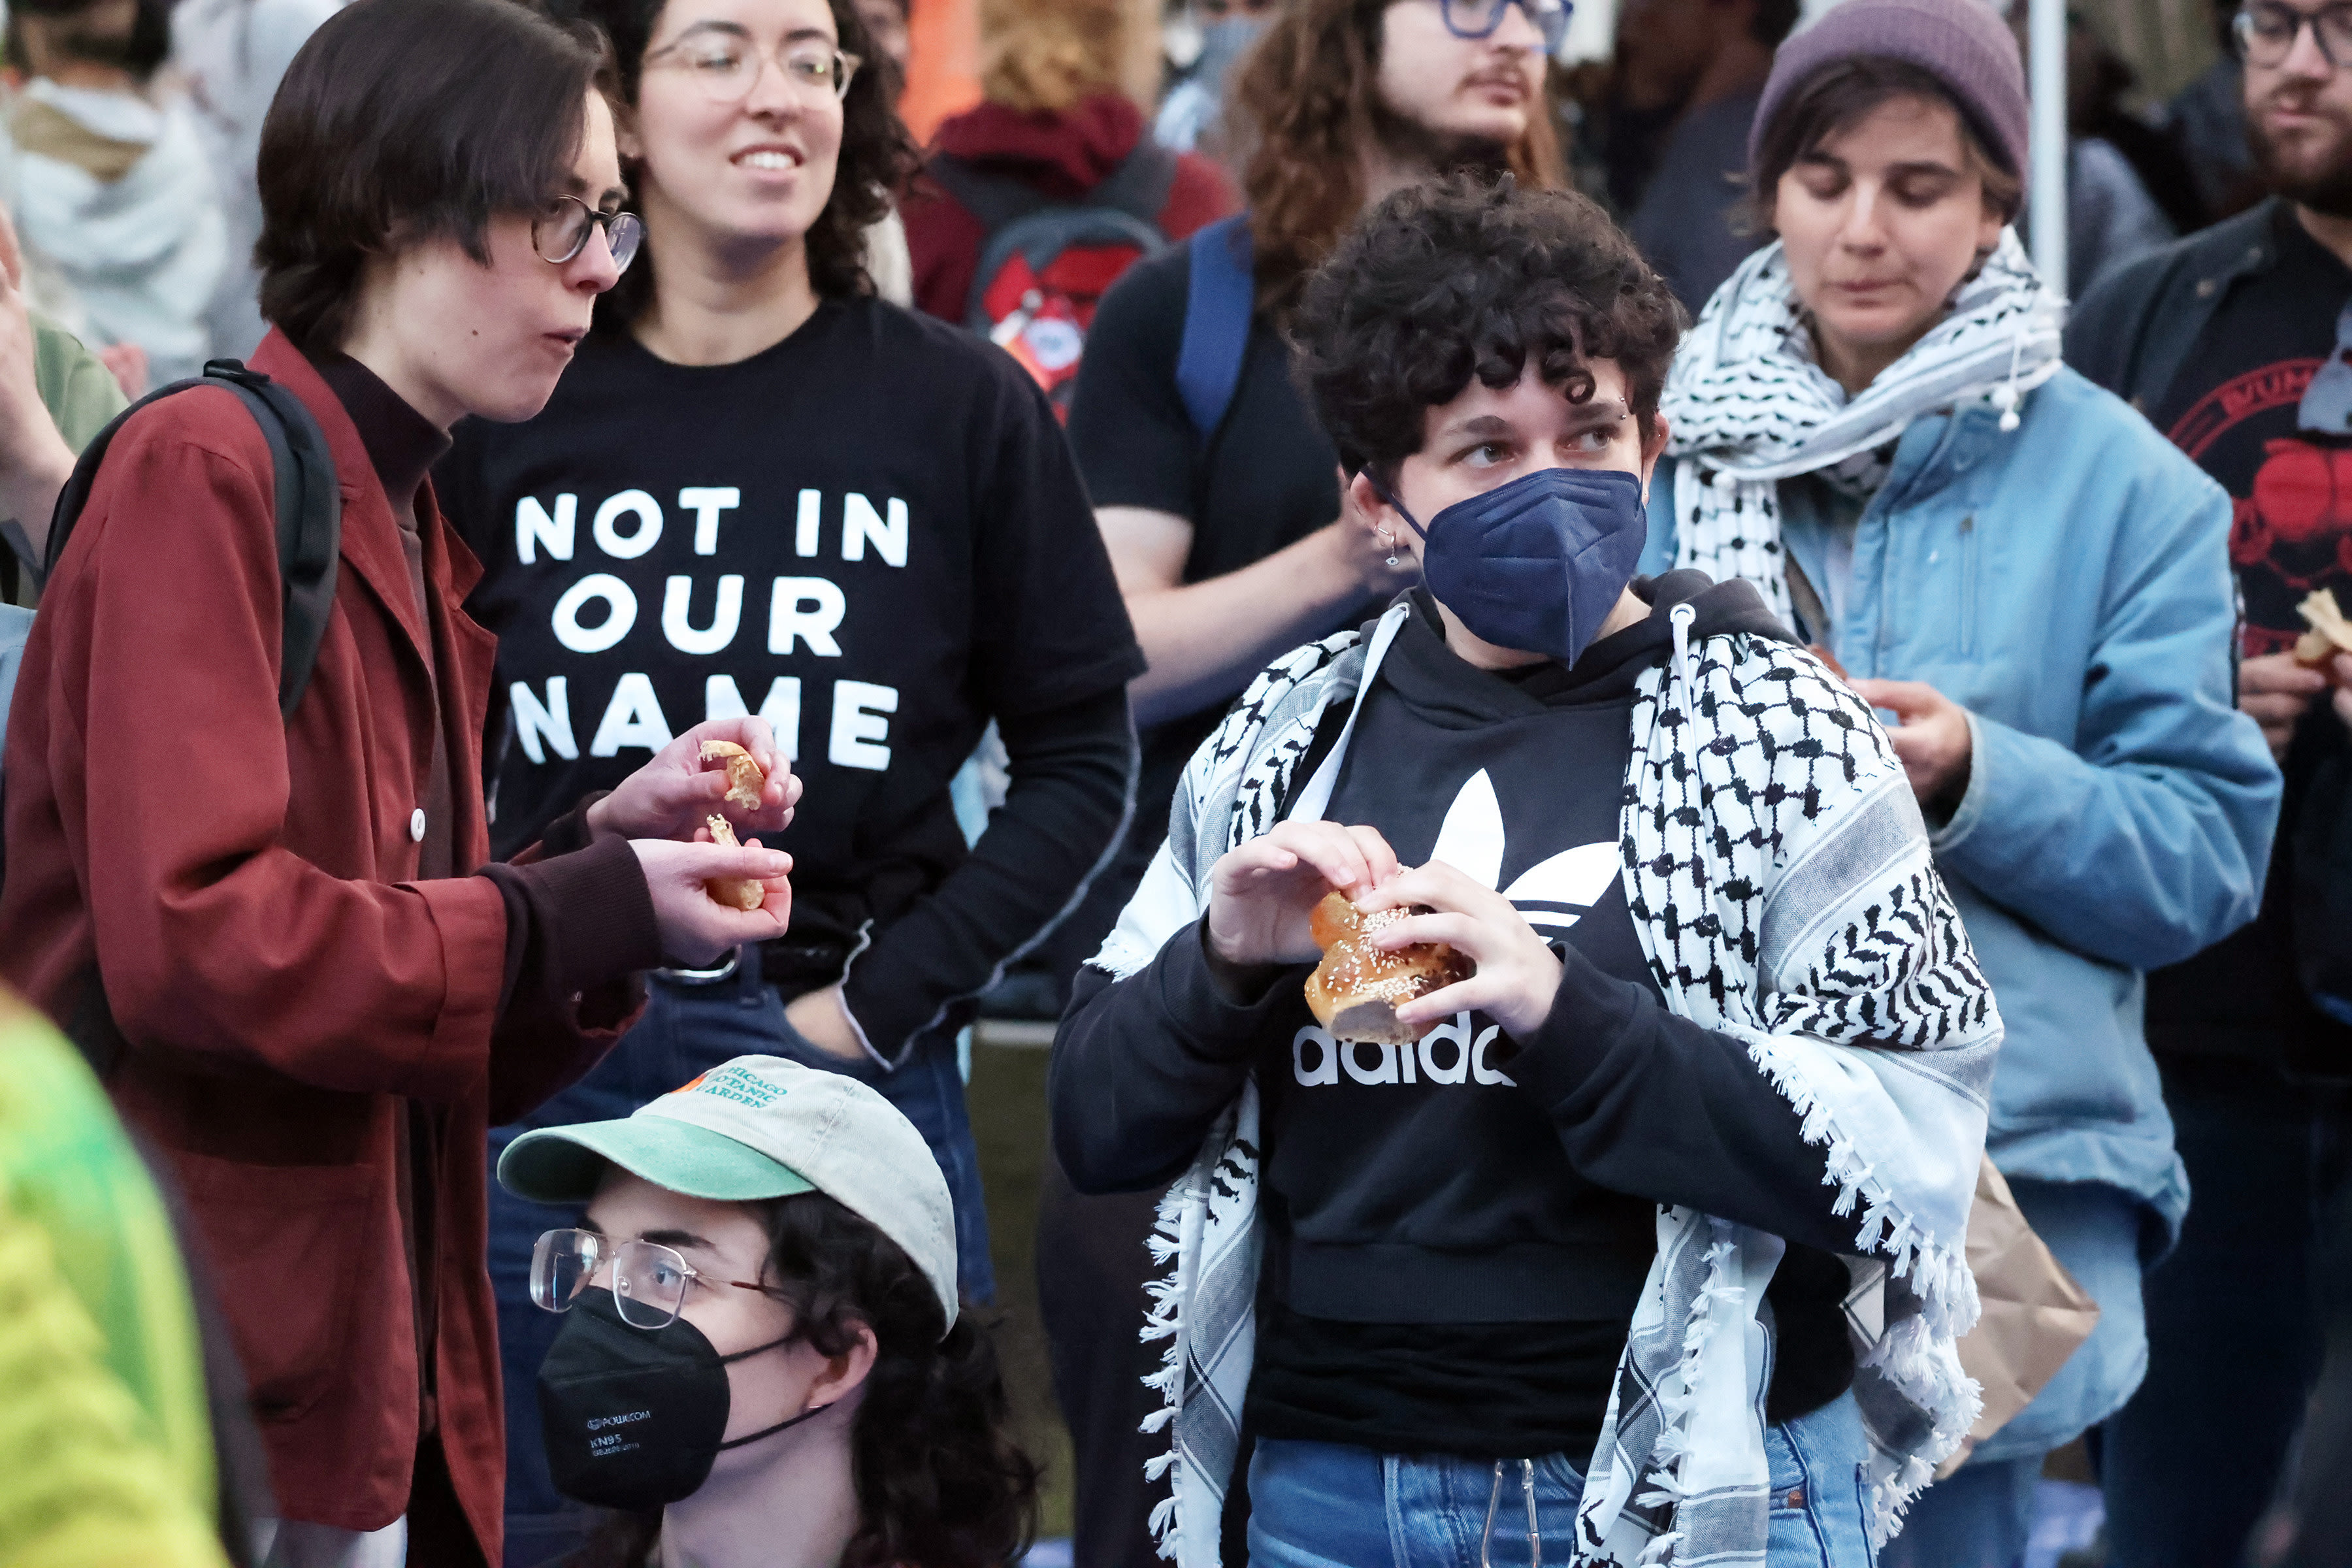 At U. of C. encampment, Jewish organizers explain significance of their anti-Zionist Shabbat service